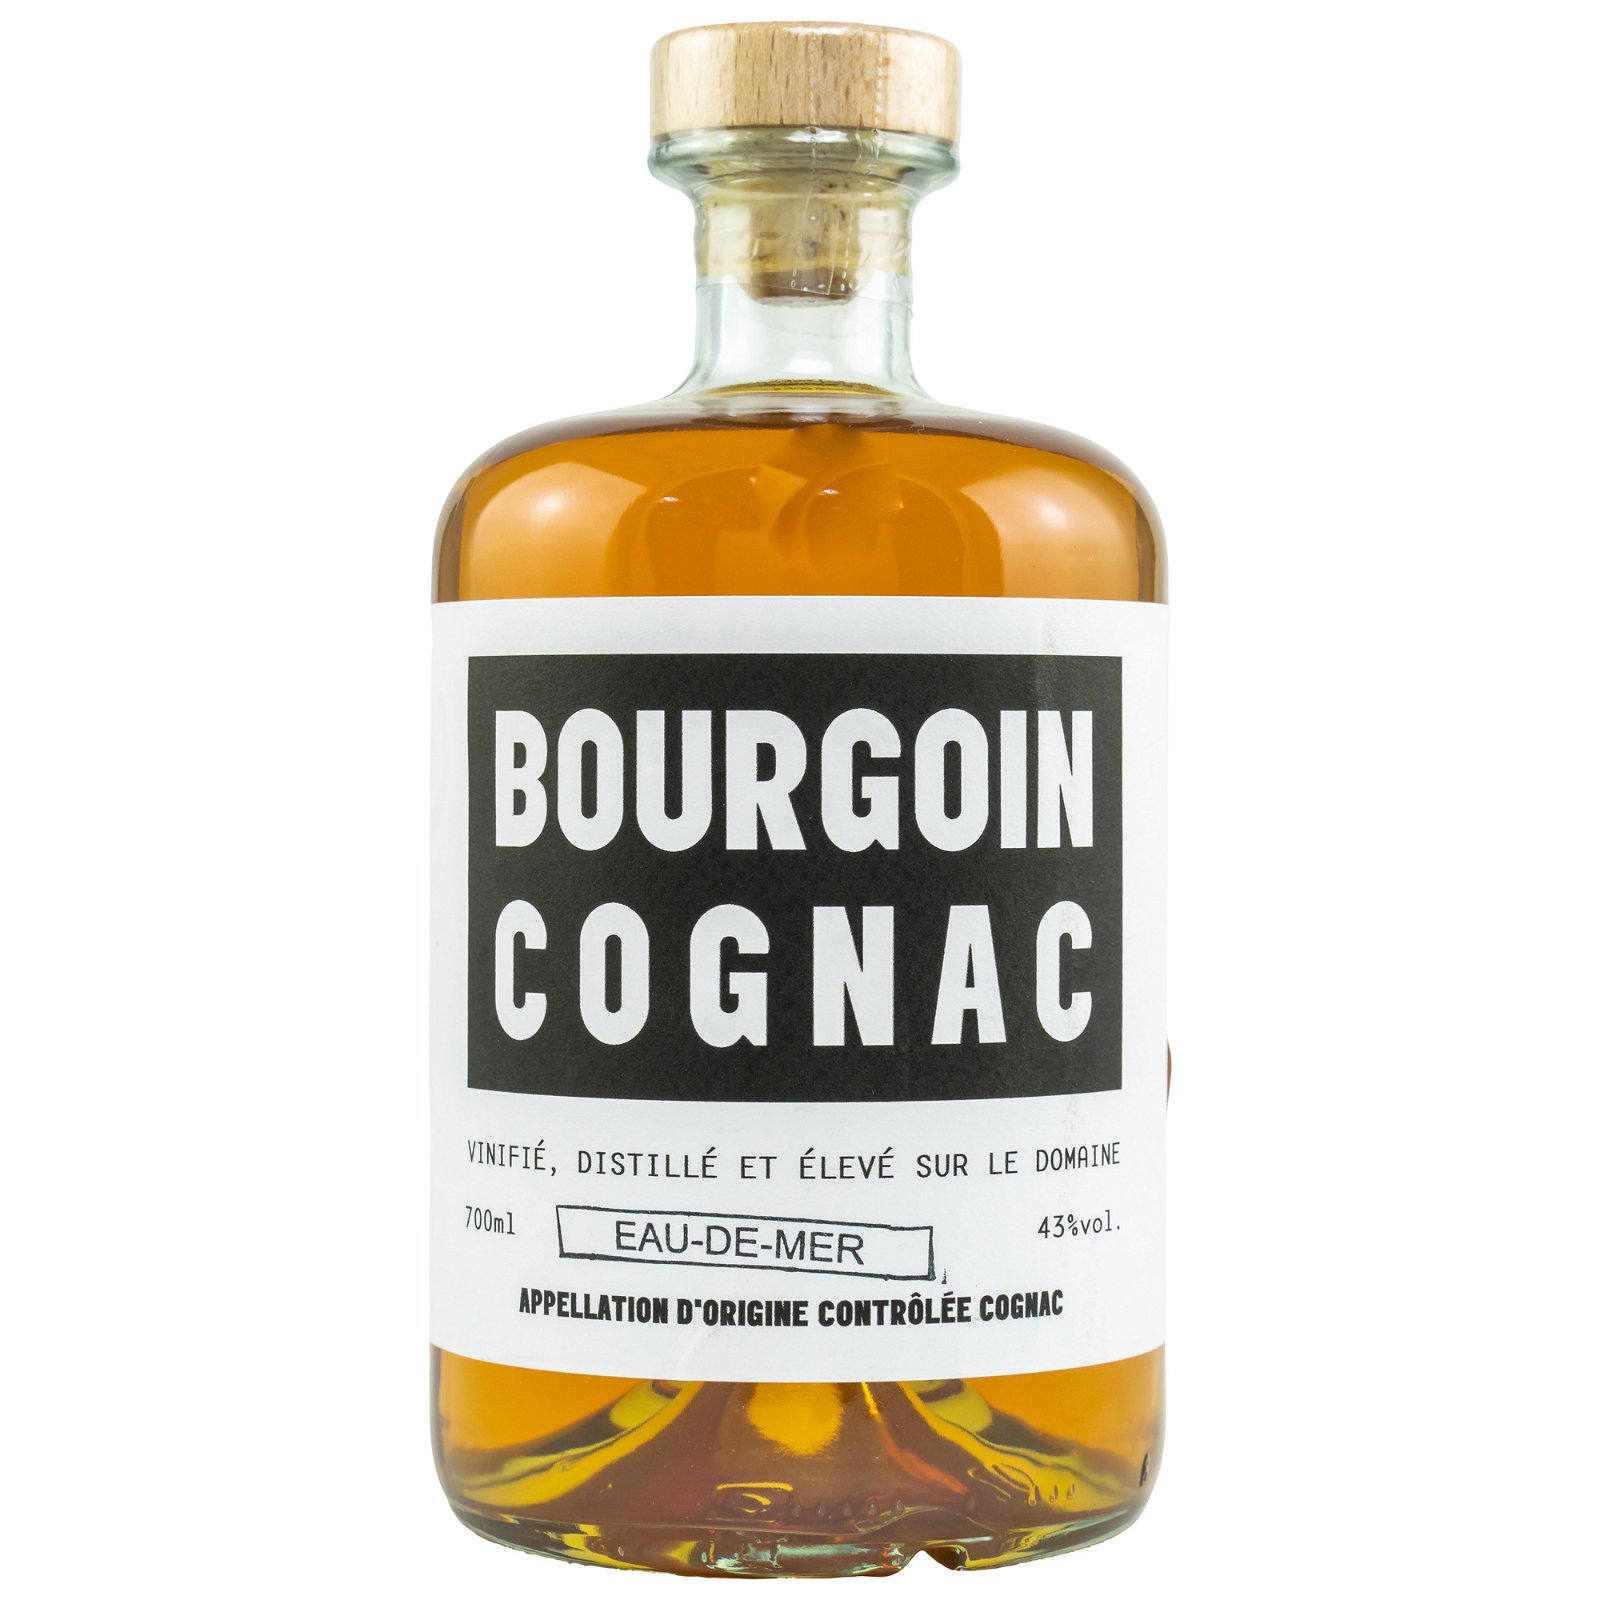 Bourgoin Cognac Eau de Mer M.2012